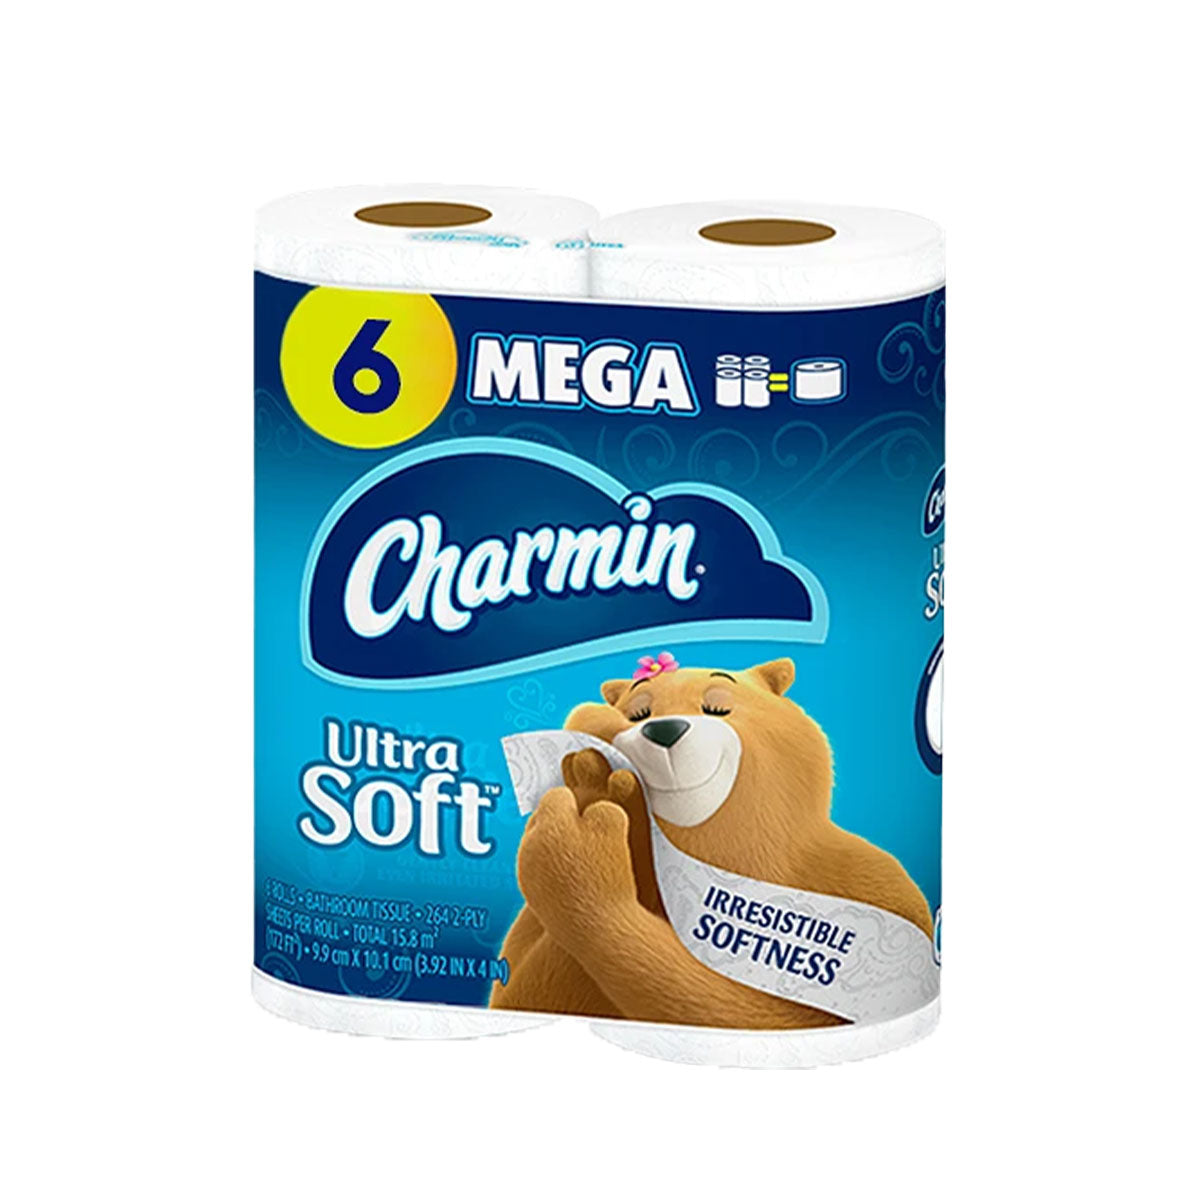 Papel higiénico Charmin Doble hoja Ultra Soft (6 Mega Rollos de 26,6 m) (1 Mega Rollo = 4 rollos regulares)